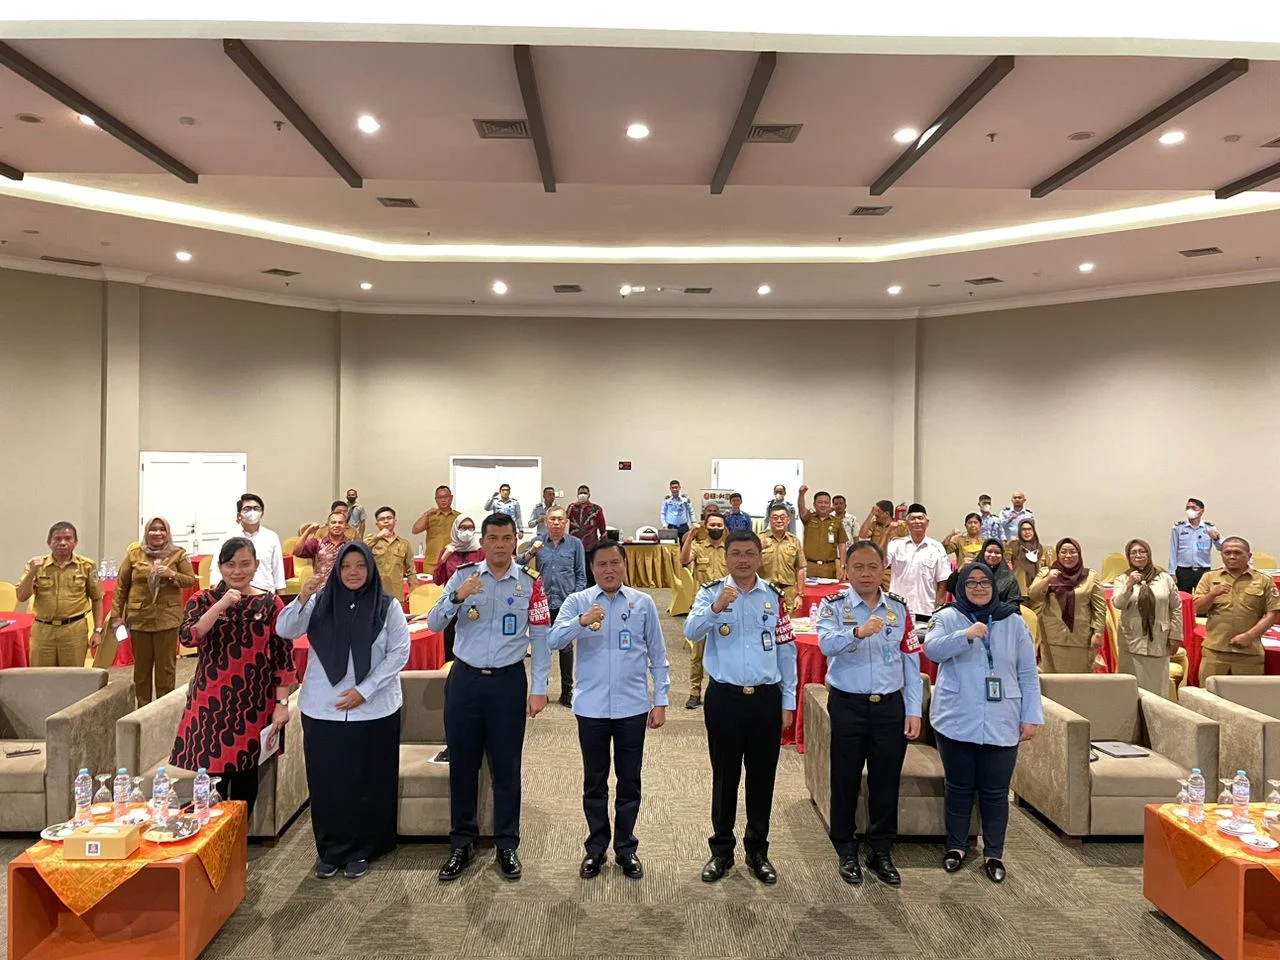 Kantor Wilayah Kementerian Hukum dan HAM Sulawesi Utara melalui Sub Bidang Pelayanan Kekayaan Intelektual melaksanakan kegiatan diseminasi percepatan perlindungan dan pencatatan KIK dan IG. (Foto istimewa)